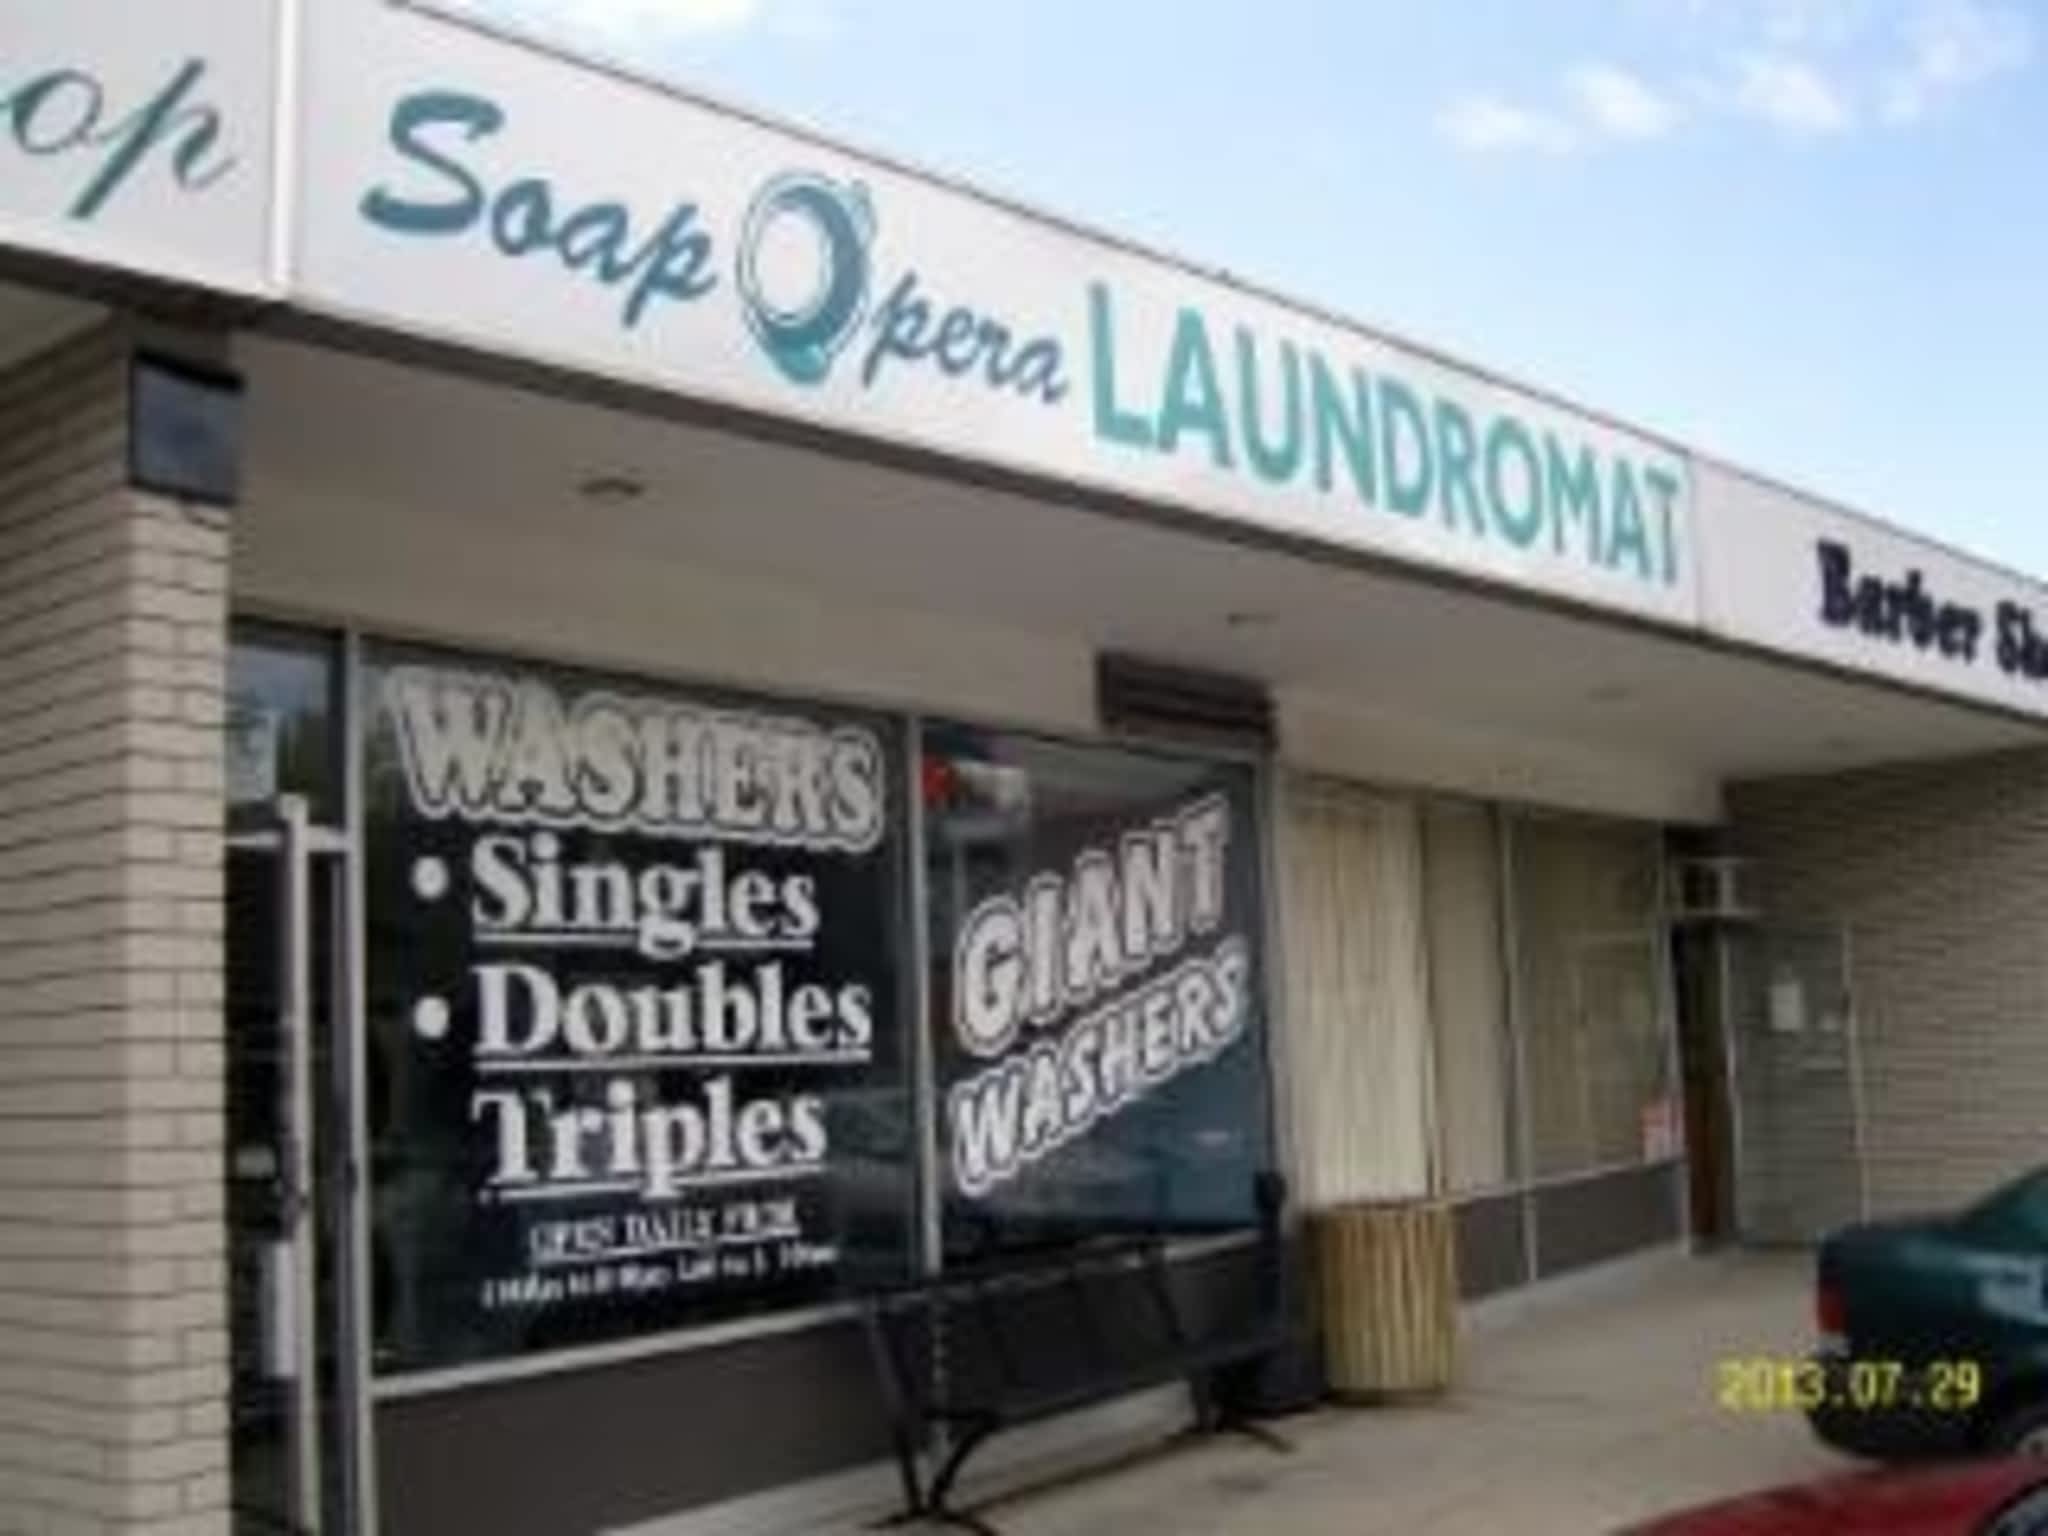 photo Soap Opera Laundromat